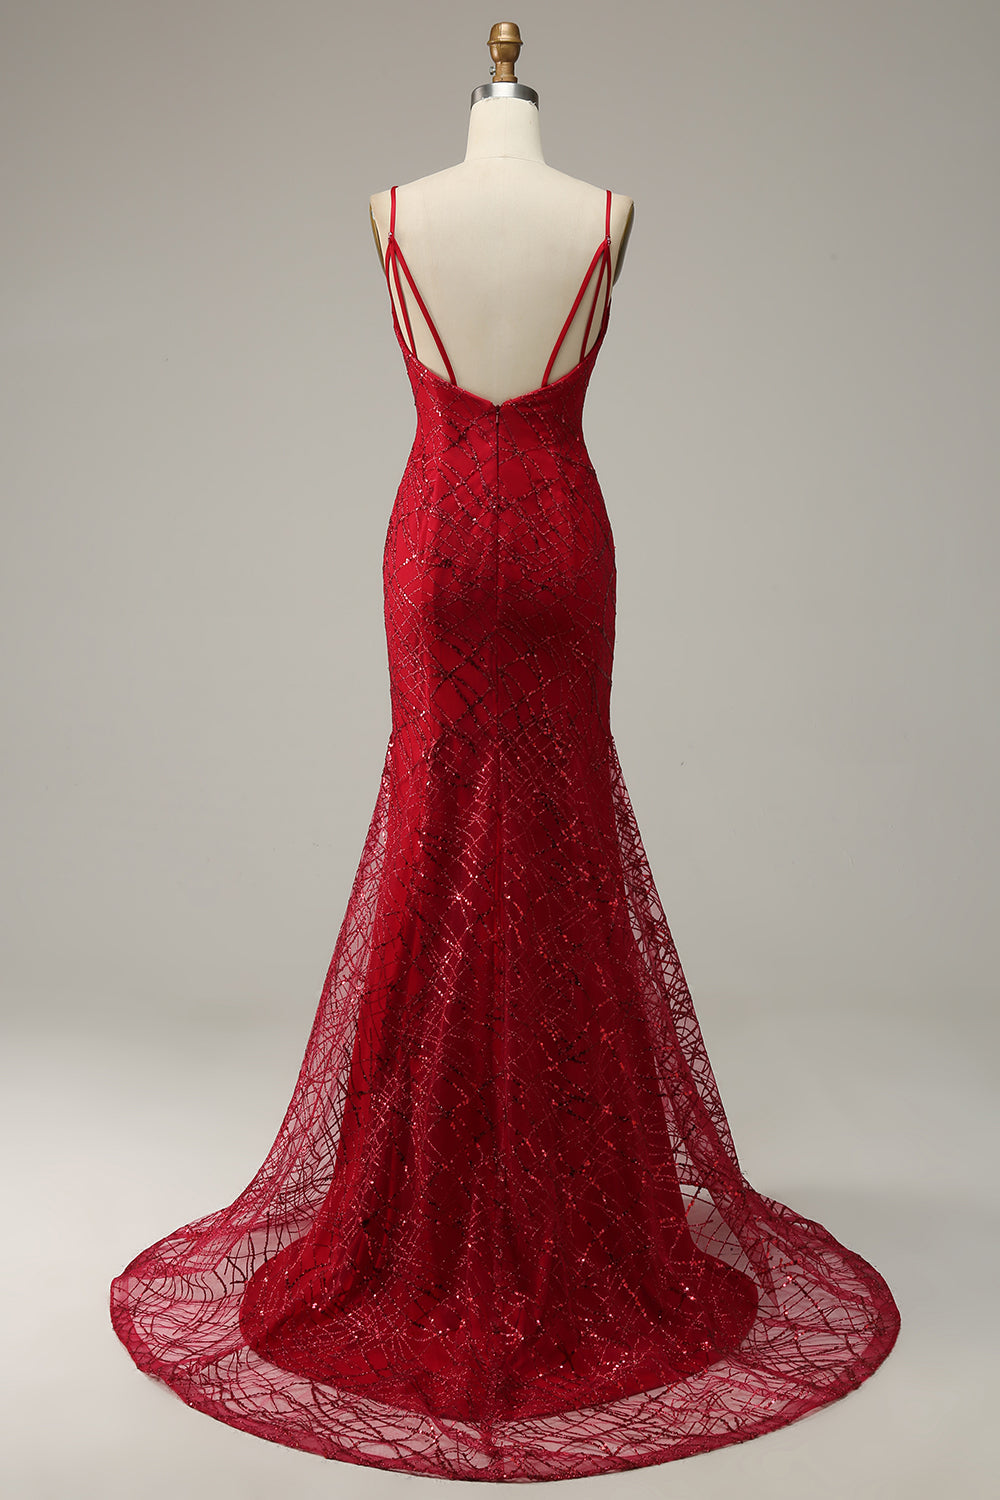 red spaghetti strap dress